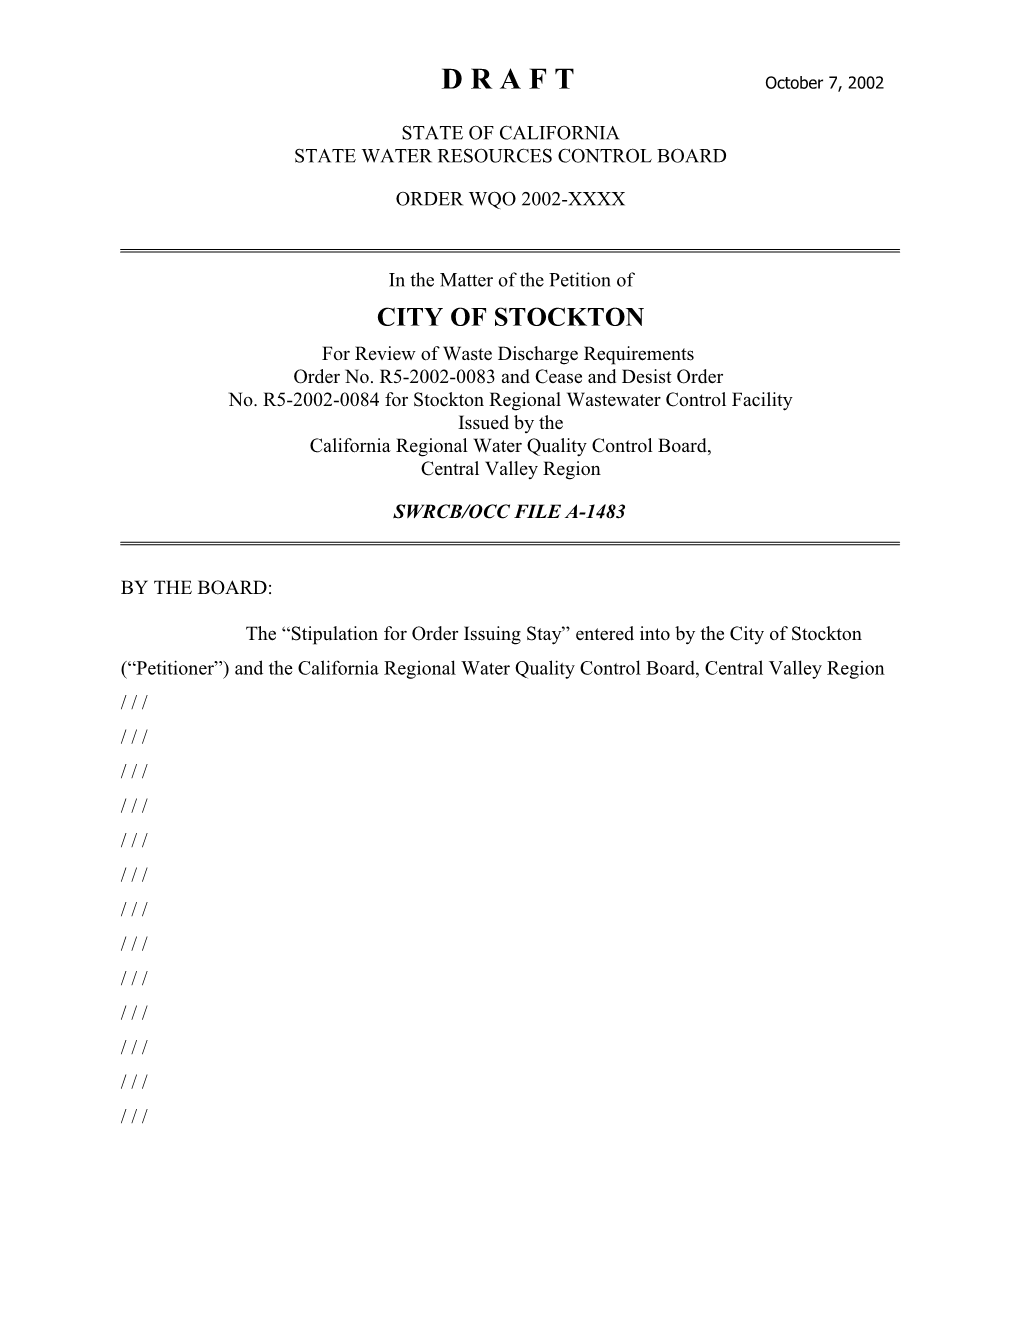 Petition/City of Stockton